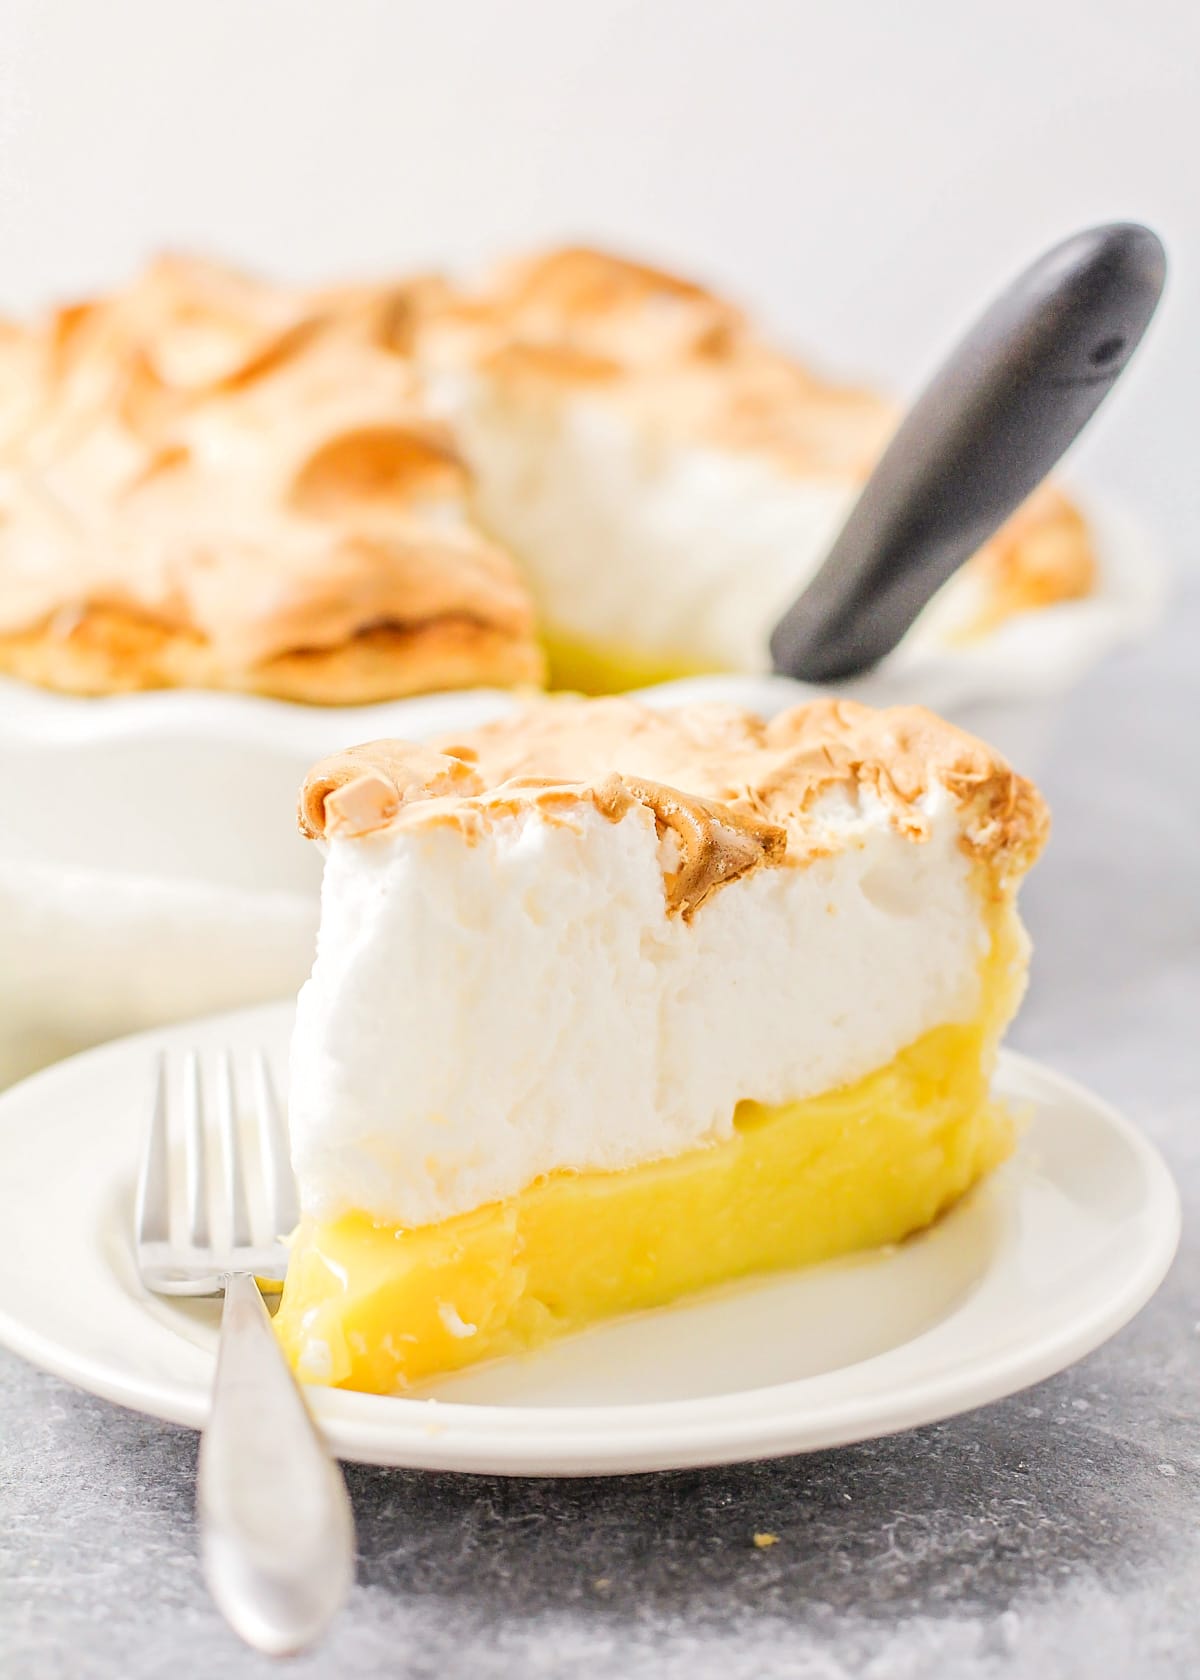 A slice of lemon meringue pie, showing the layers.